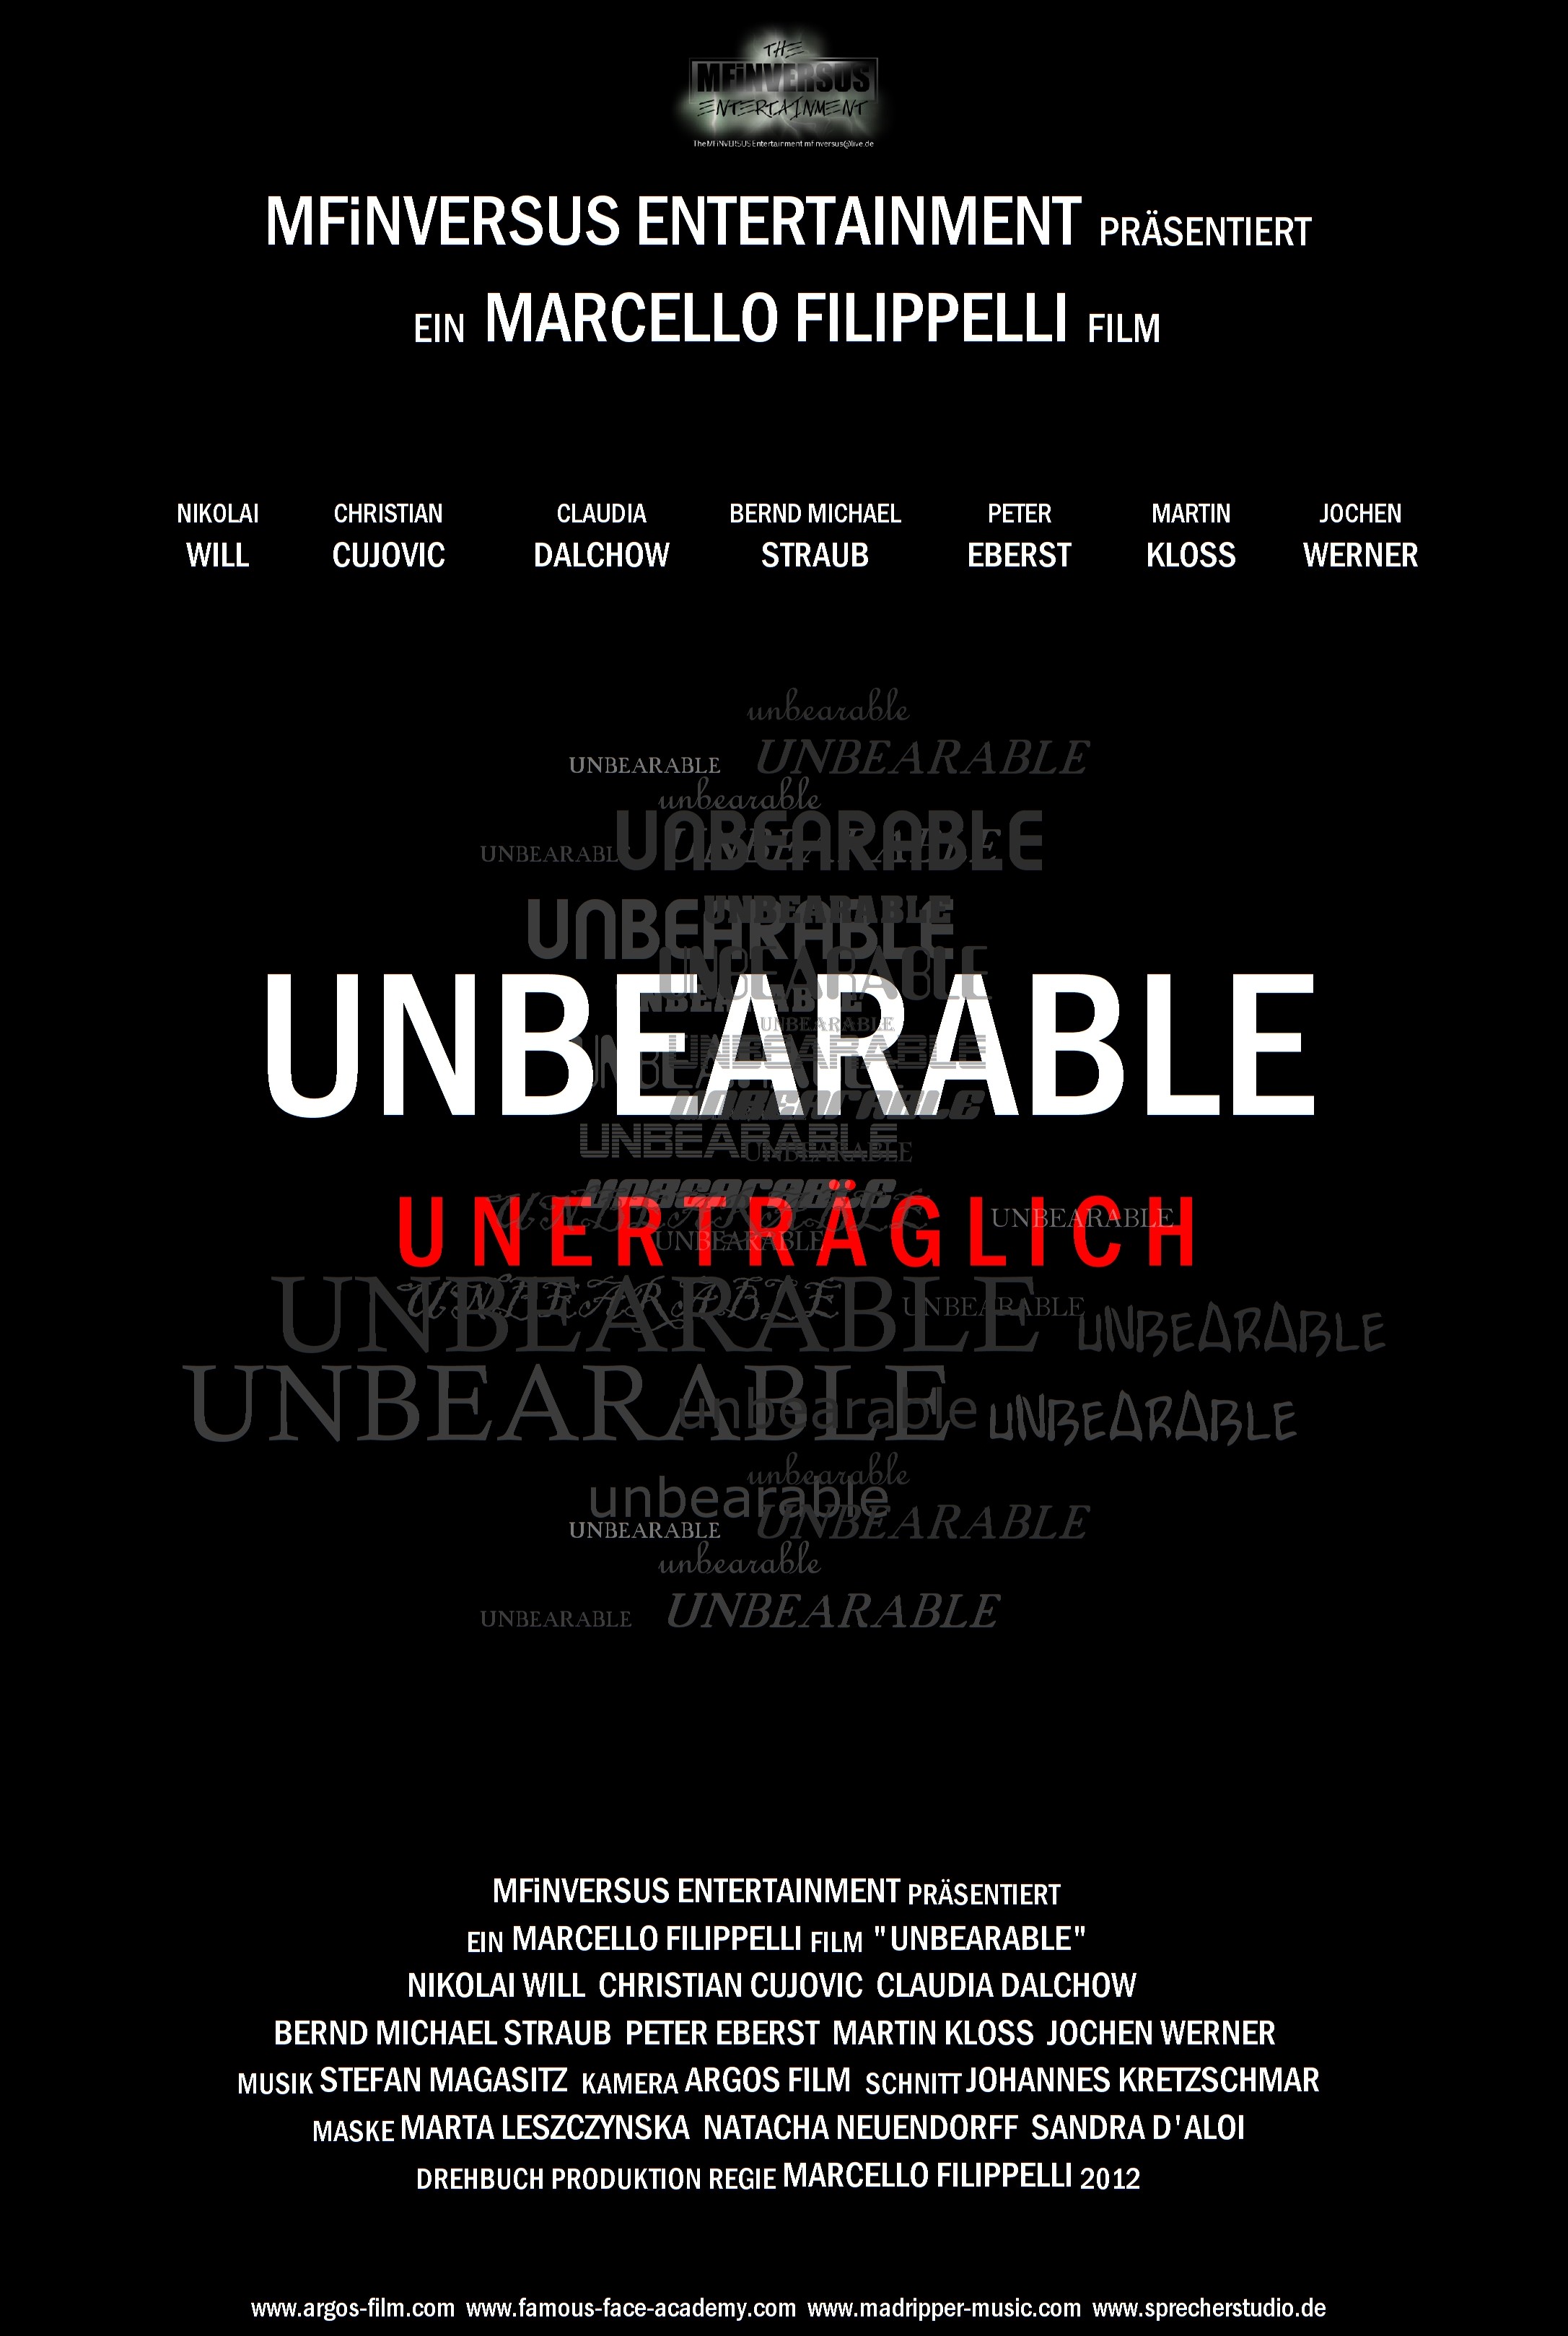 UNBEARABLE - UNETRÄGLICH, a film by Marcello Filippelli